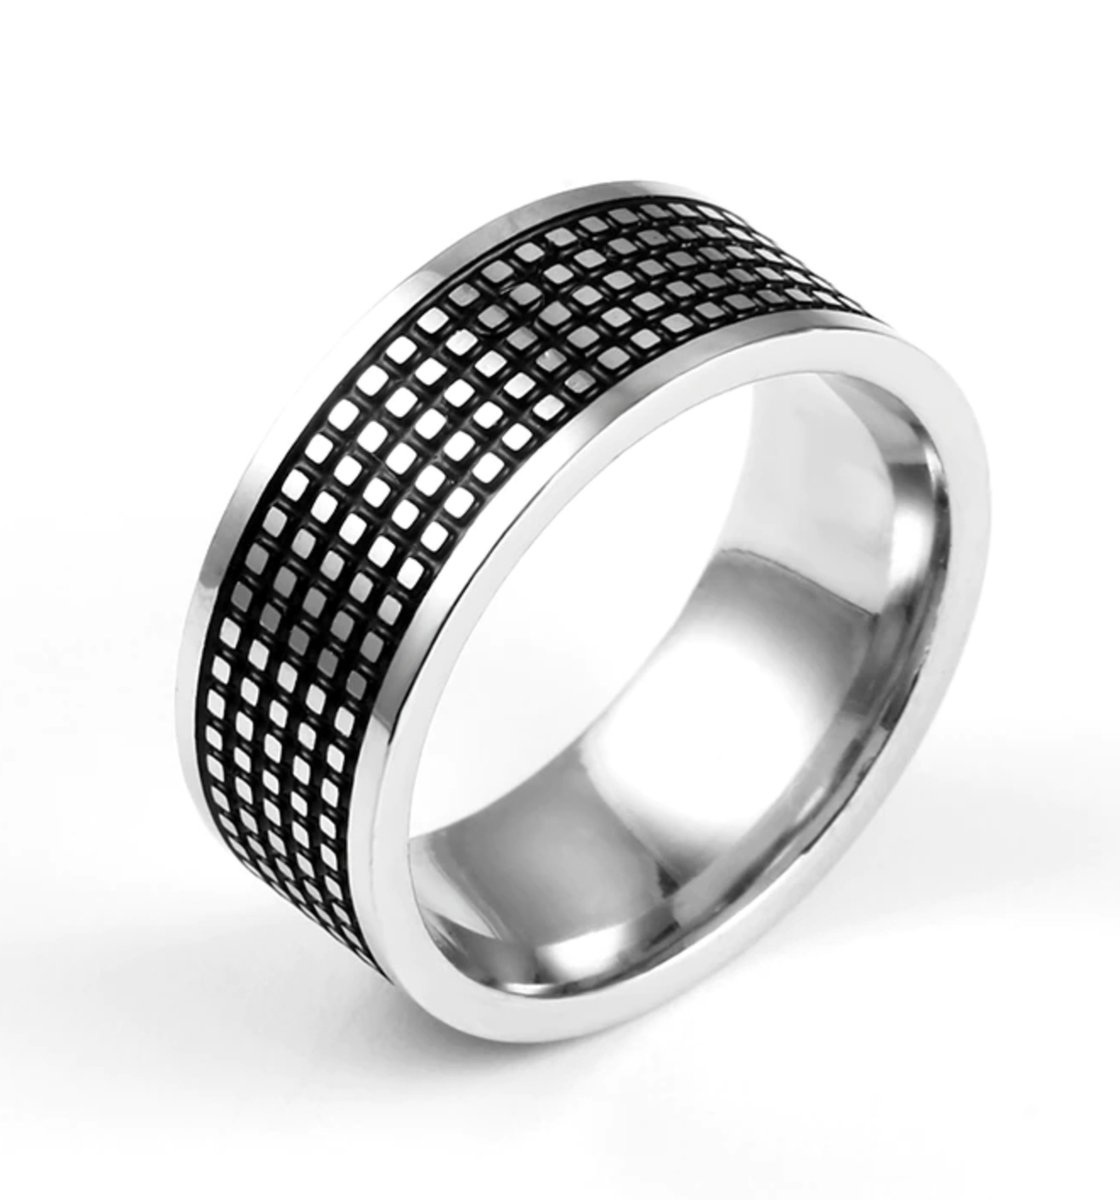 Mannen Ring | Mens Ring | Grey/Black Ring | Sieraden | Mannen Sieraden | Ringen | Sinterklaas kado | Kerst cadeau | Roestvrij staal | Grijs/zwarte Ring | Maat 68